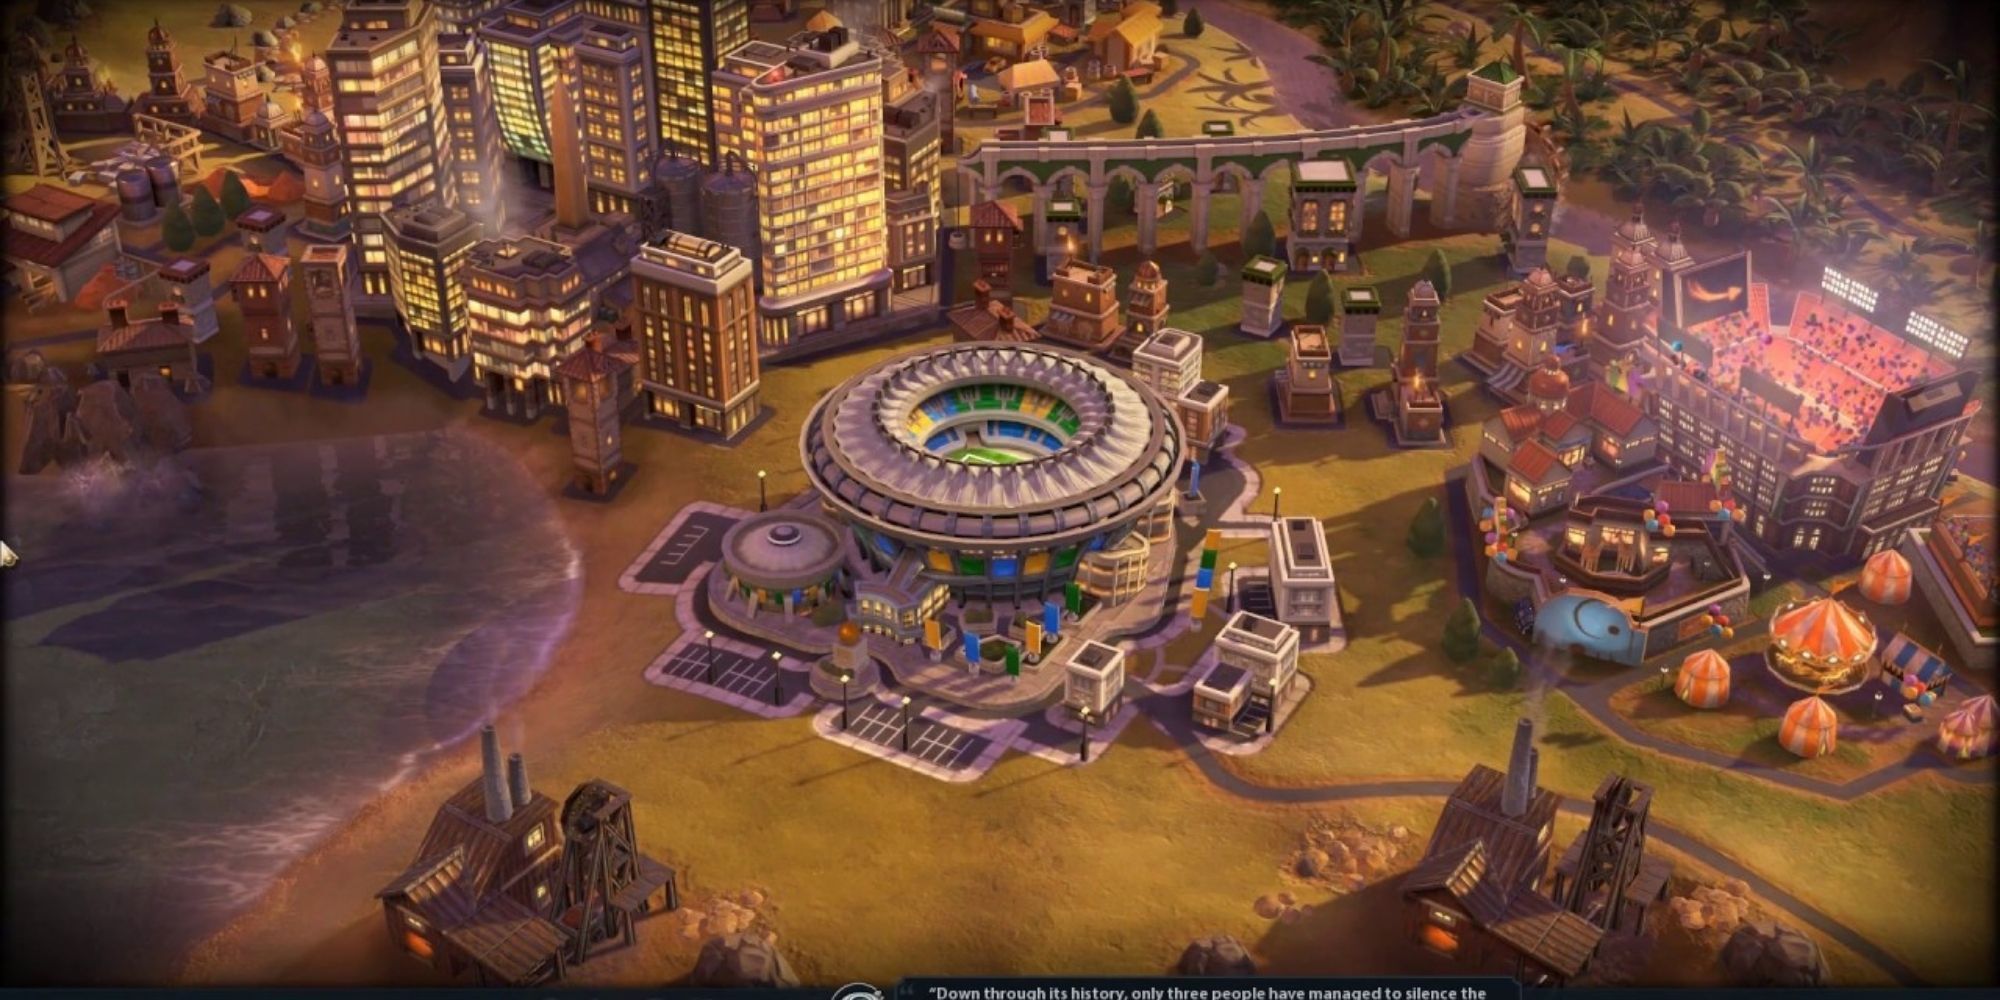 Estadio de Maracana as seen in Civilization 6